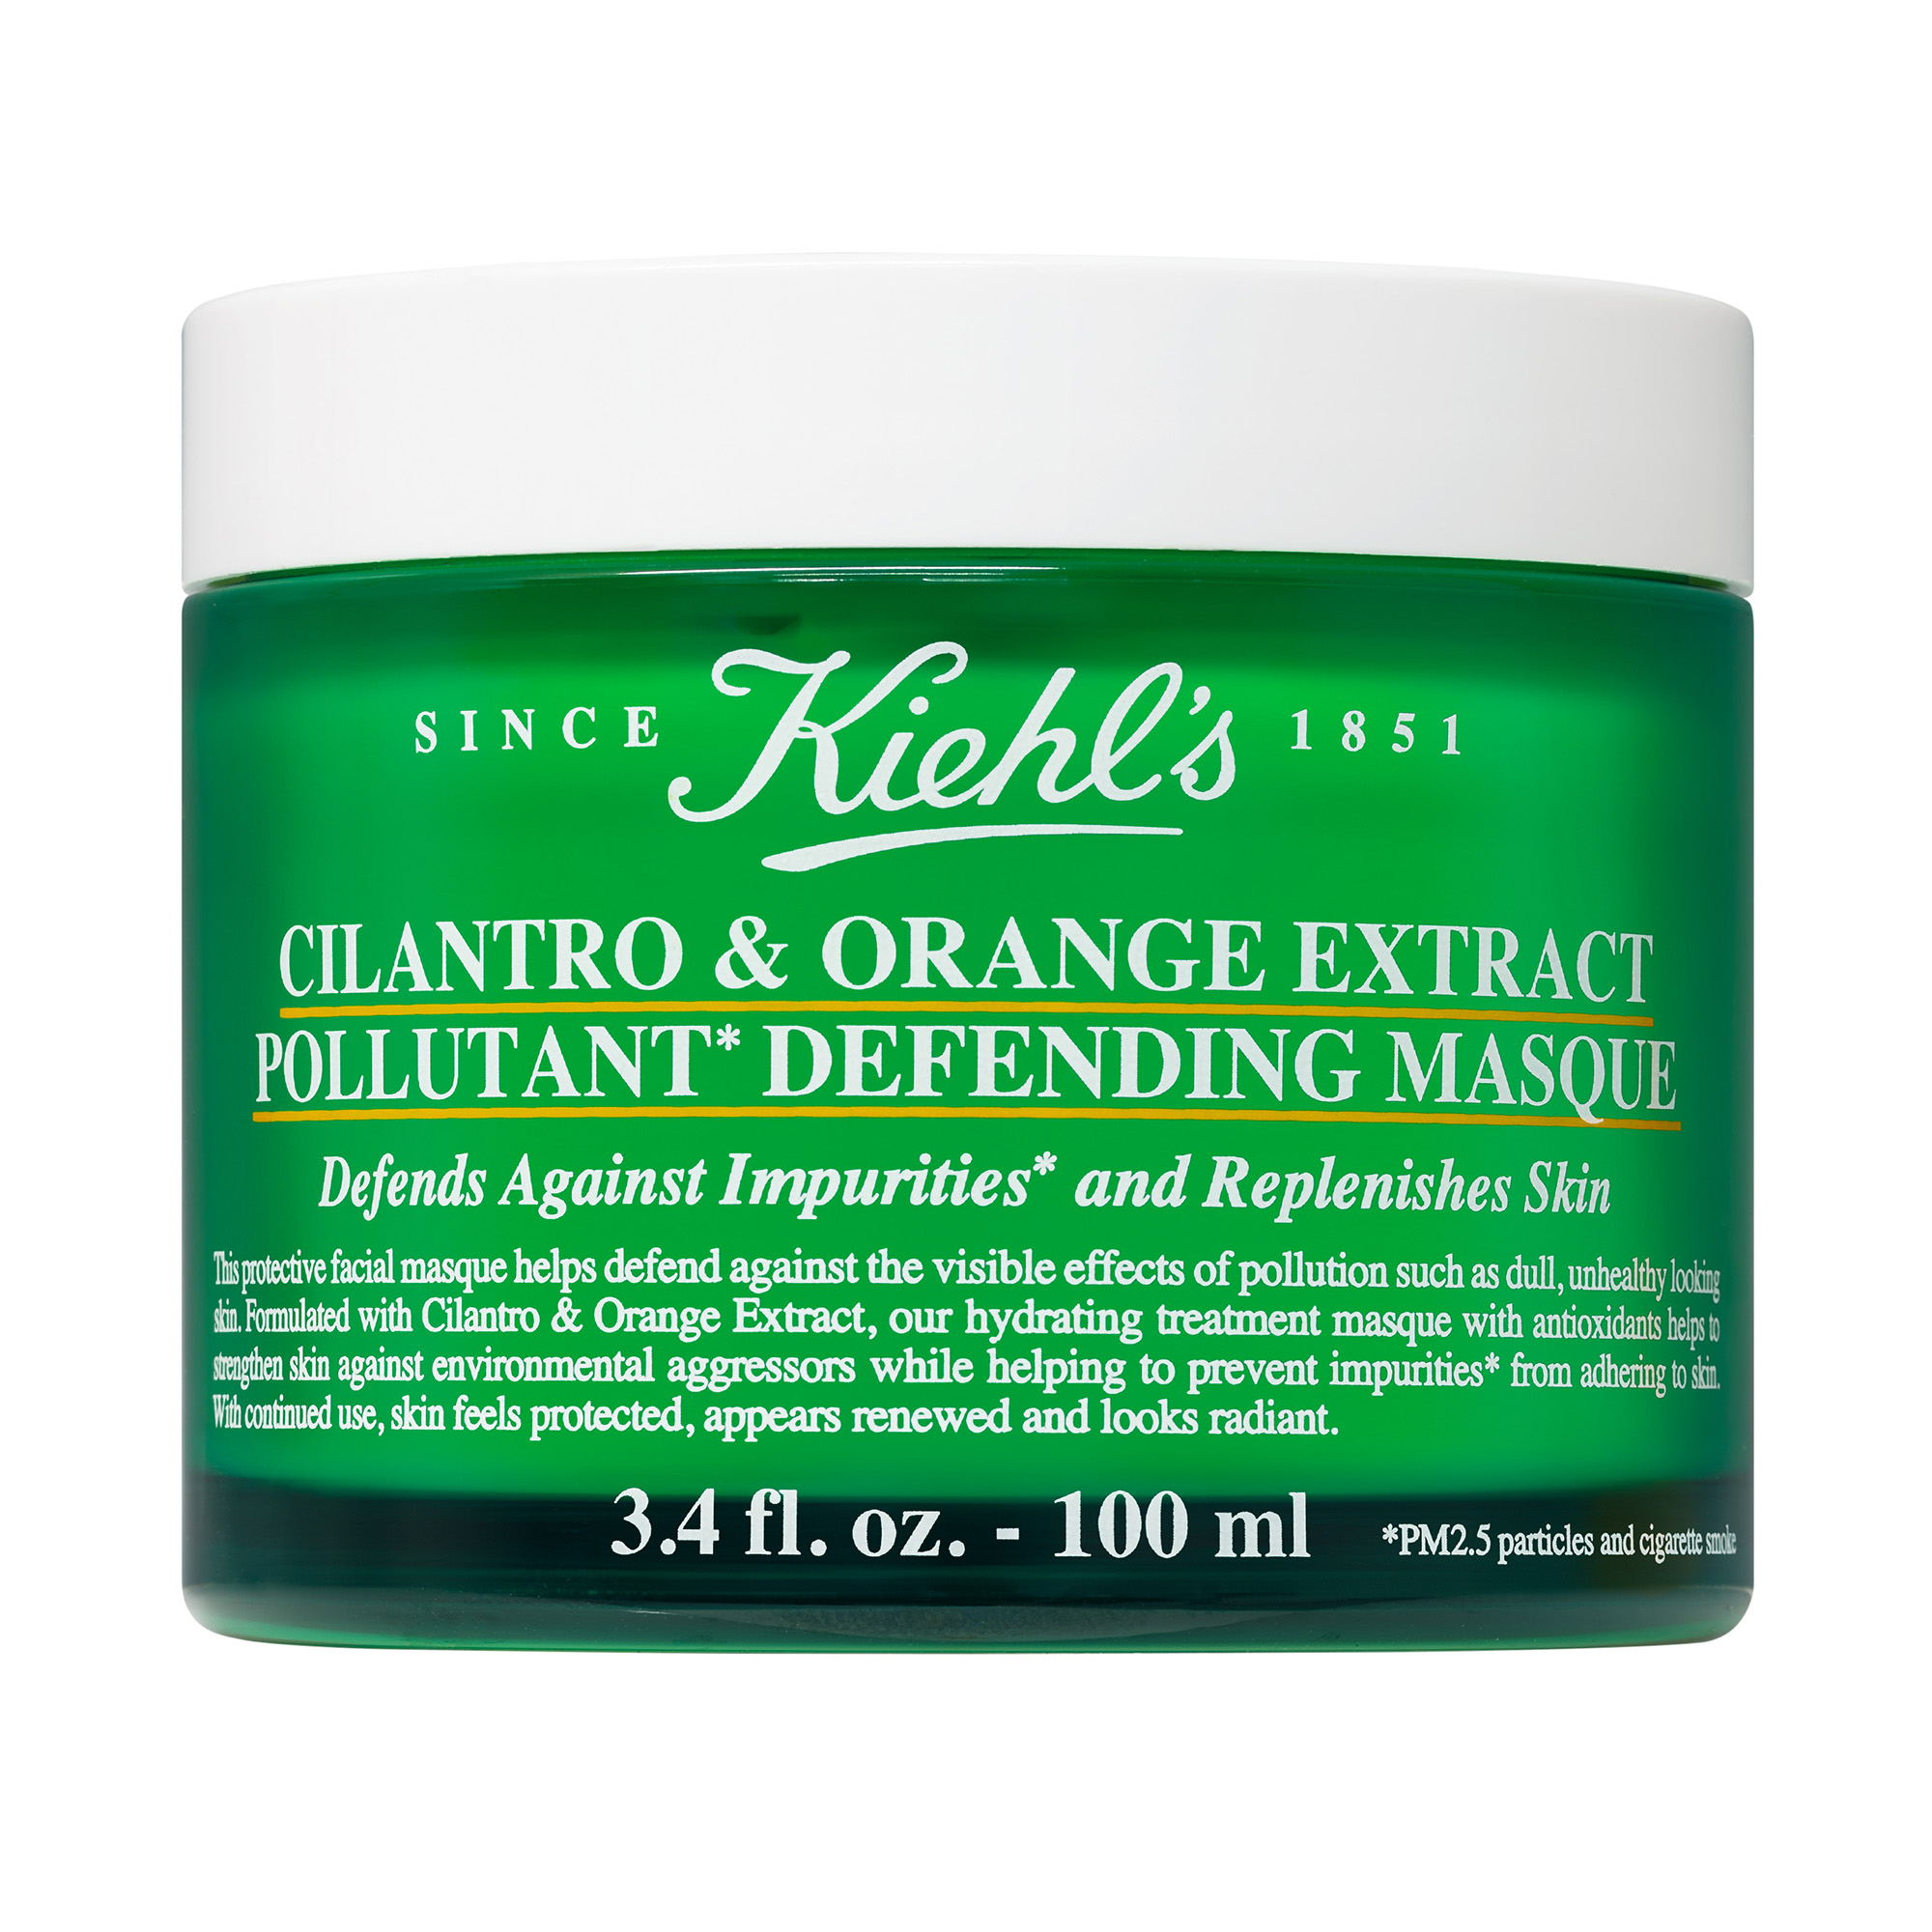 Cilantro & Orange Extract Polluntant Defending Masque 100ml